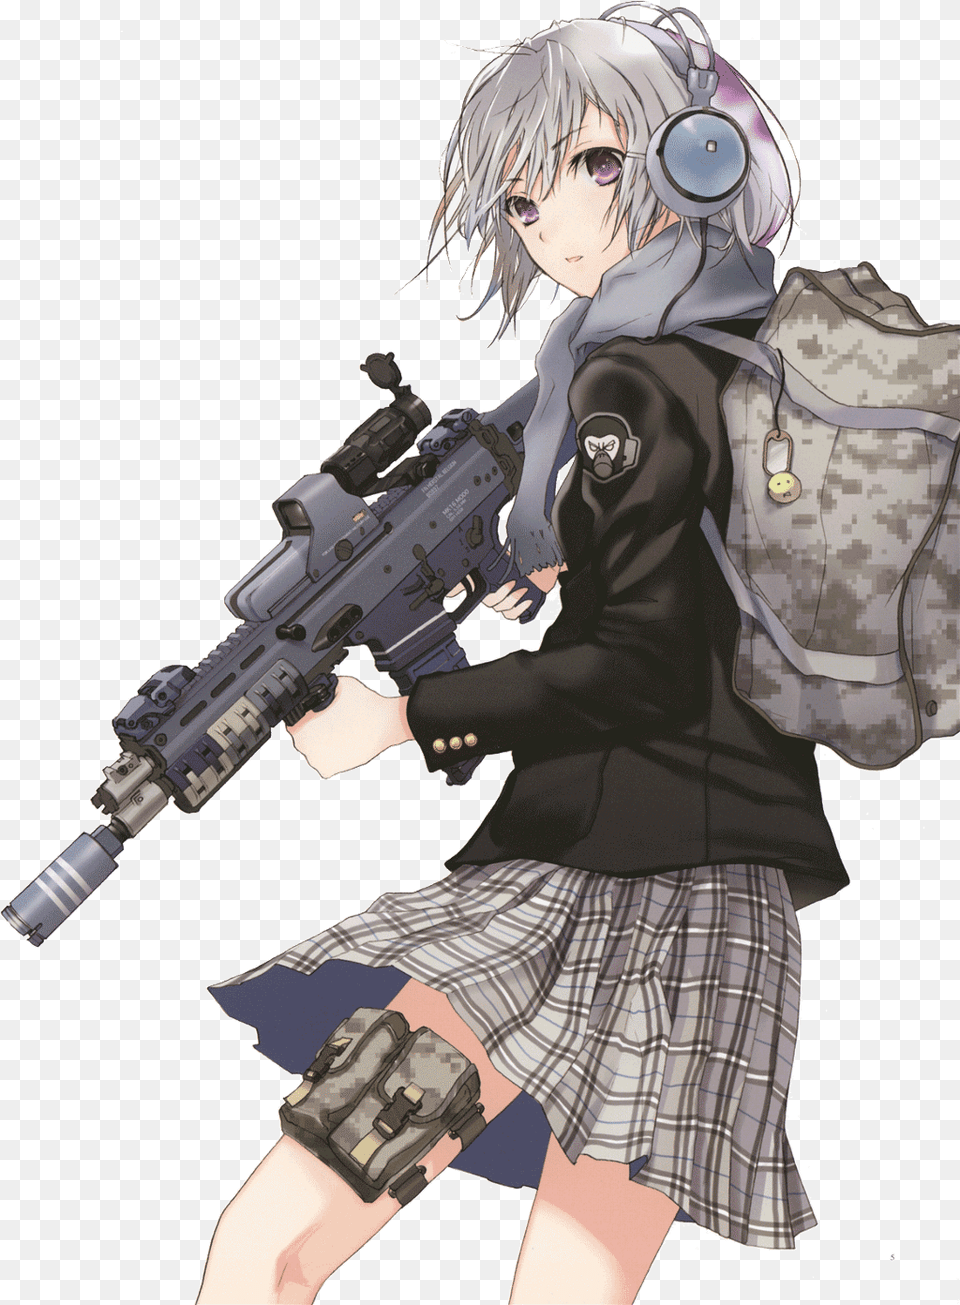 Anime Gun Anime Girl Fighters Guns, Book, Clothing, Comics, Skirt Free Png Download